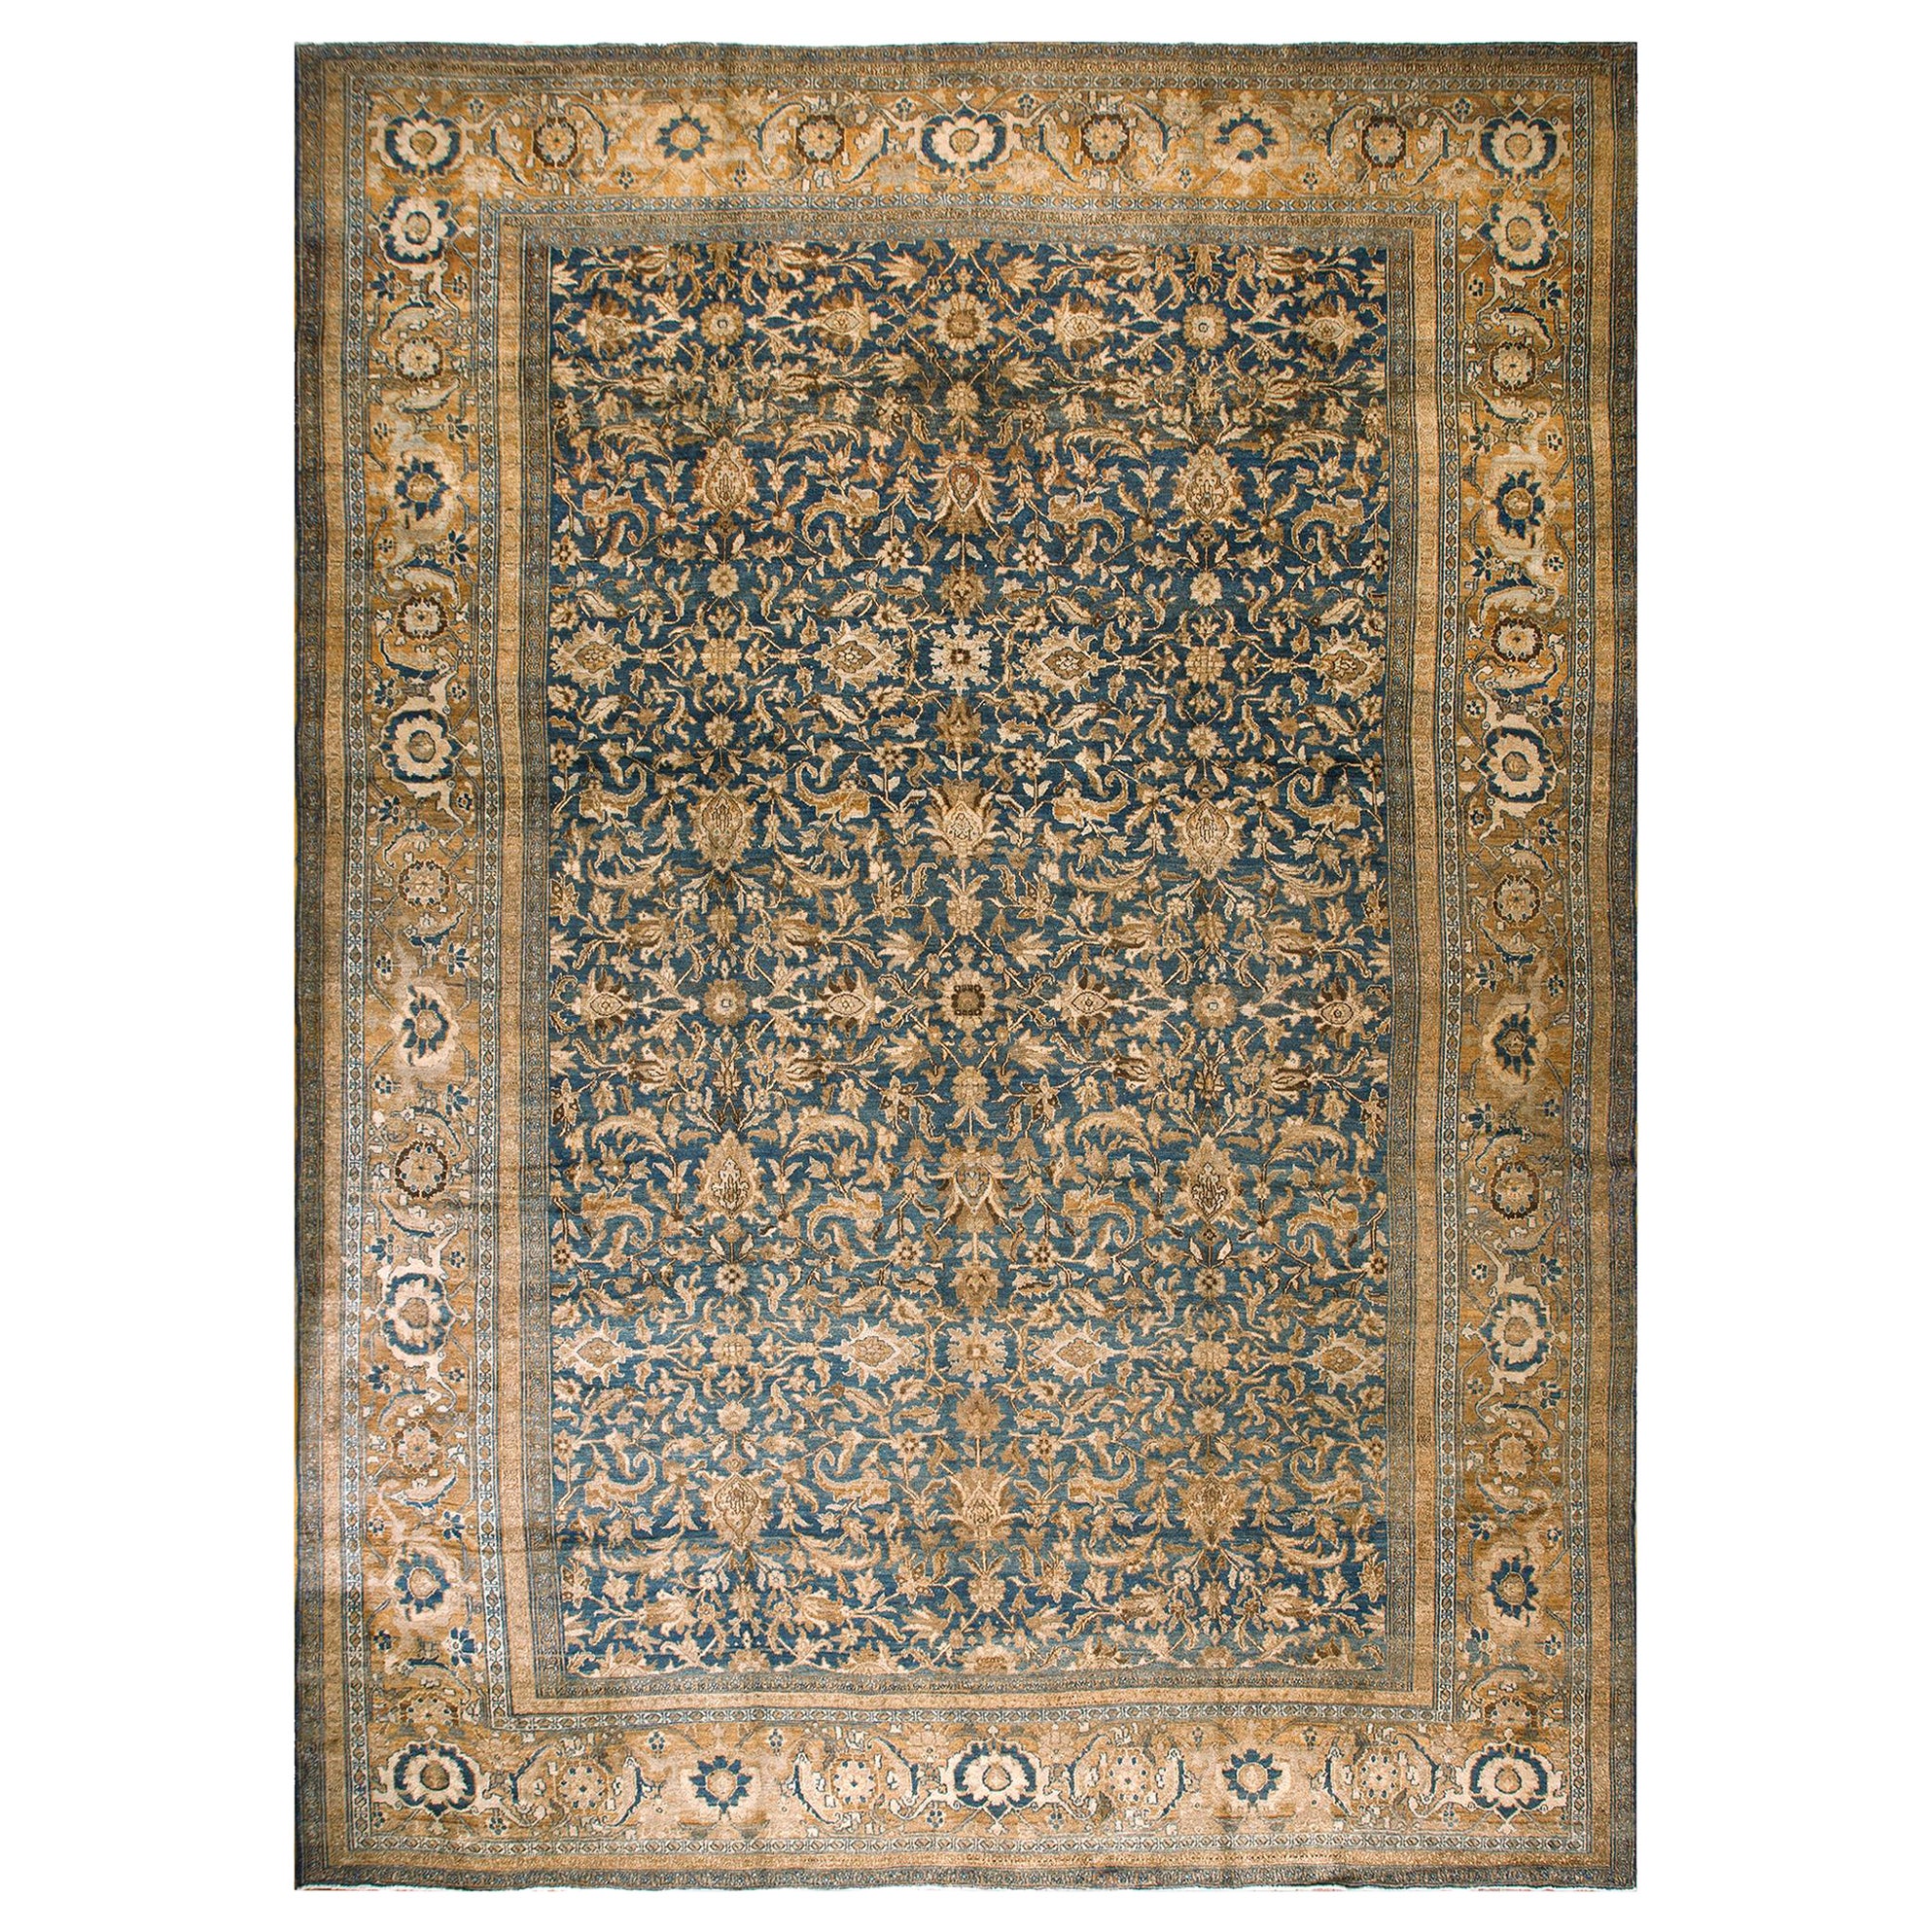 Late 19th Century Persian Bibikabad Carpet ( 12'5" x 17'5" - 378 x 530 )